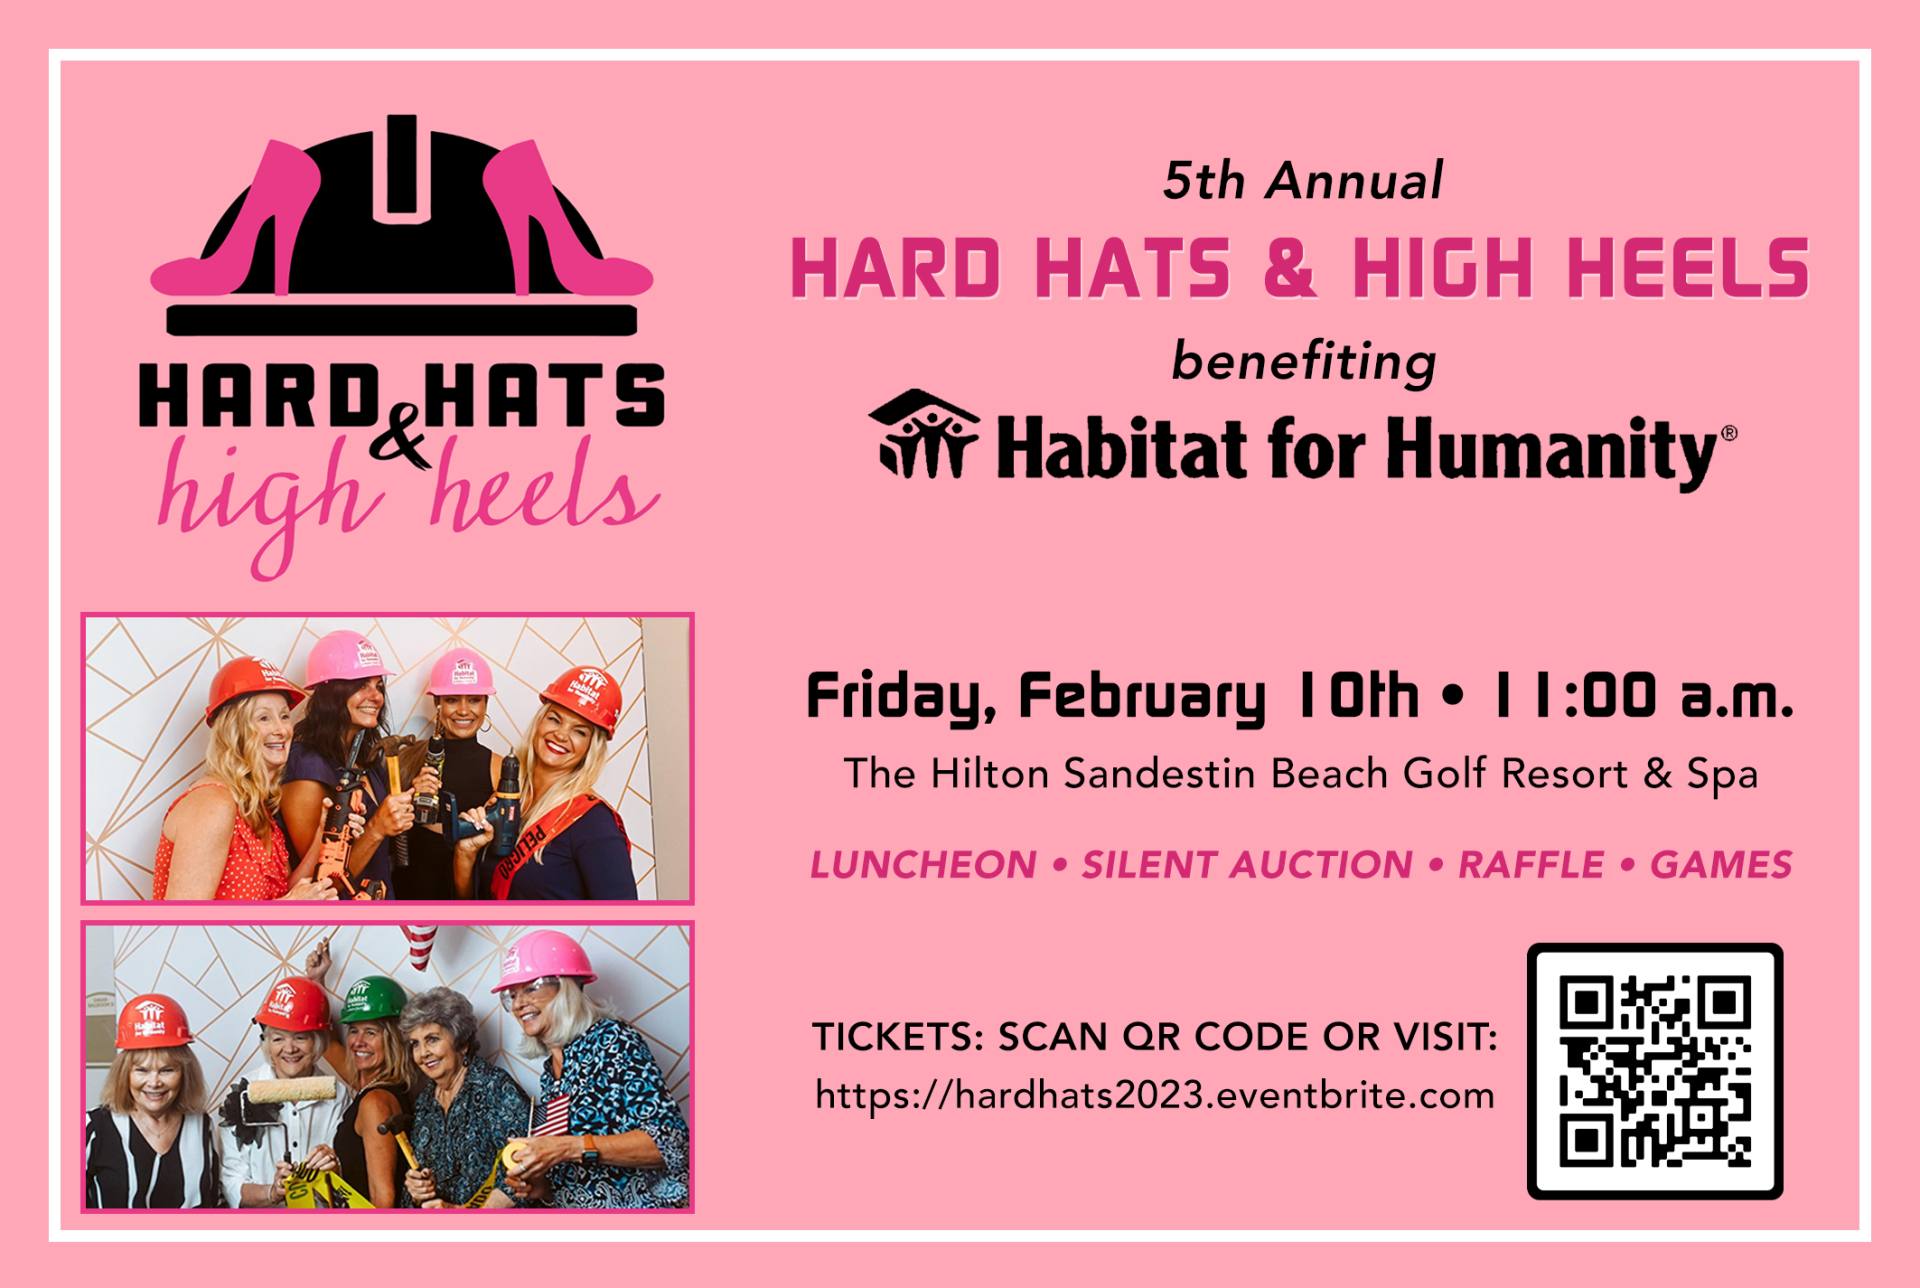 Hard Hats & High Heels event flyer